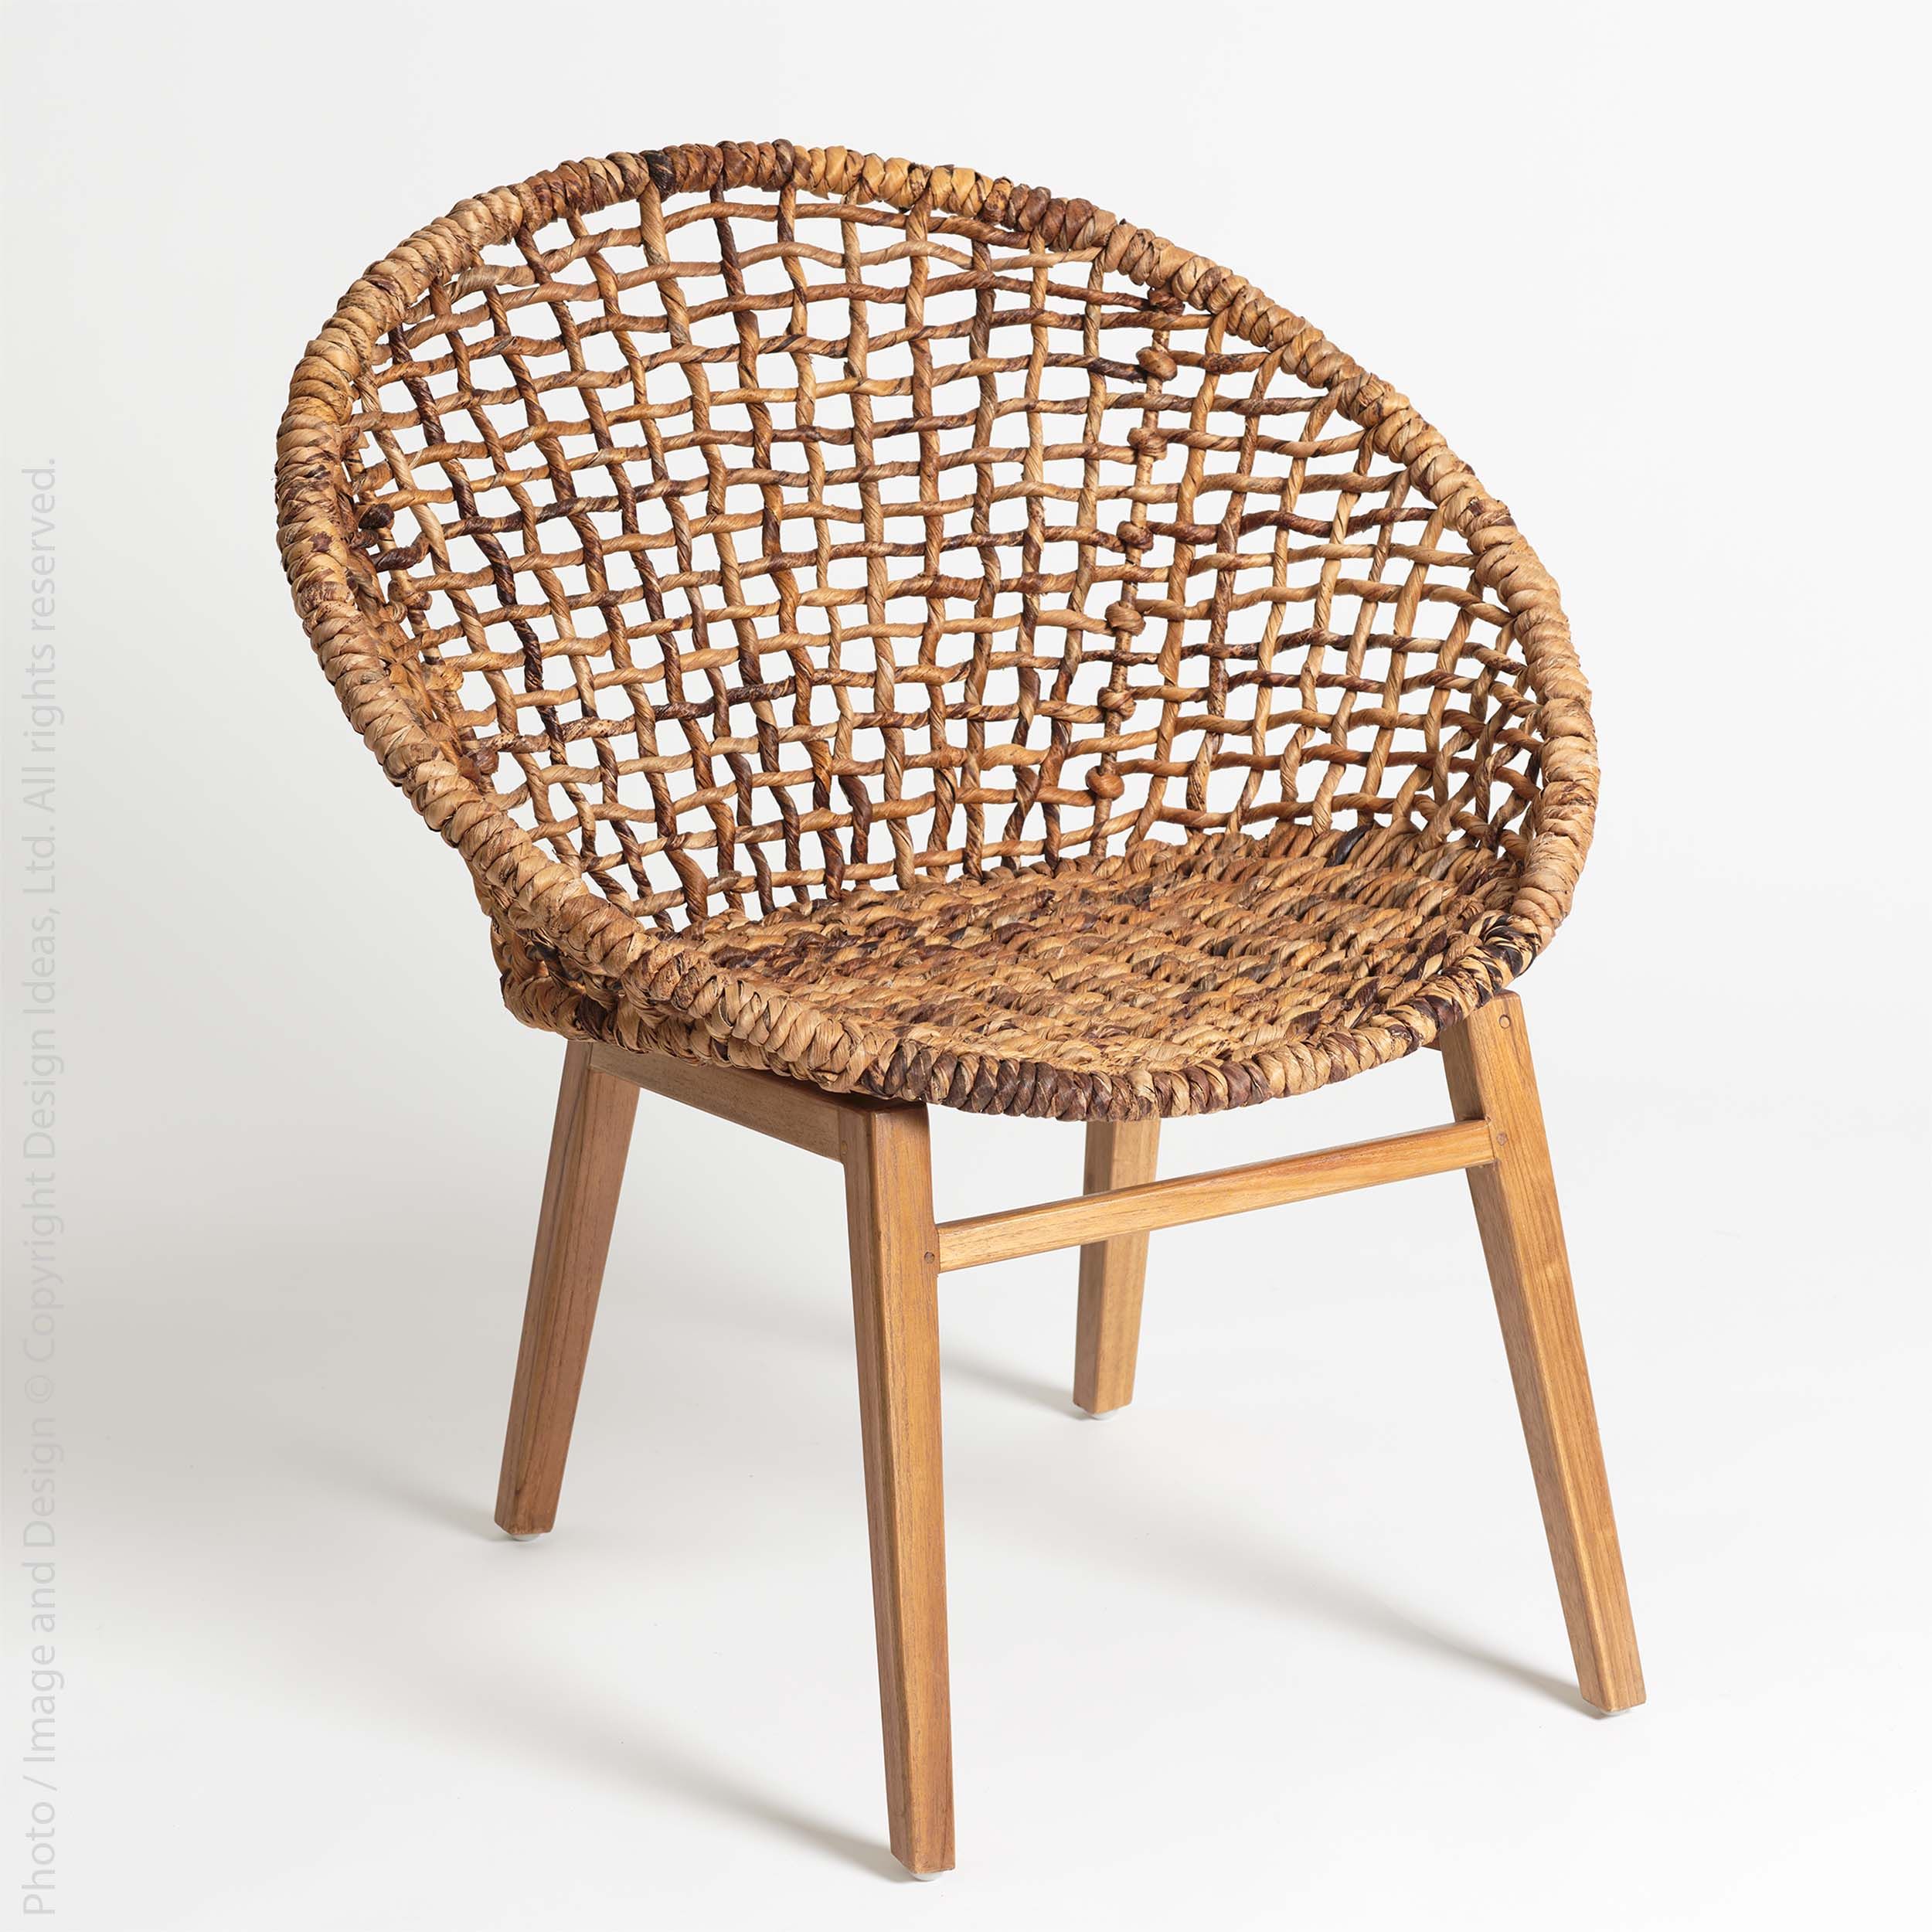 Paloma™ Abaca, wood and iron chair | Texxture Home